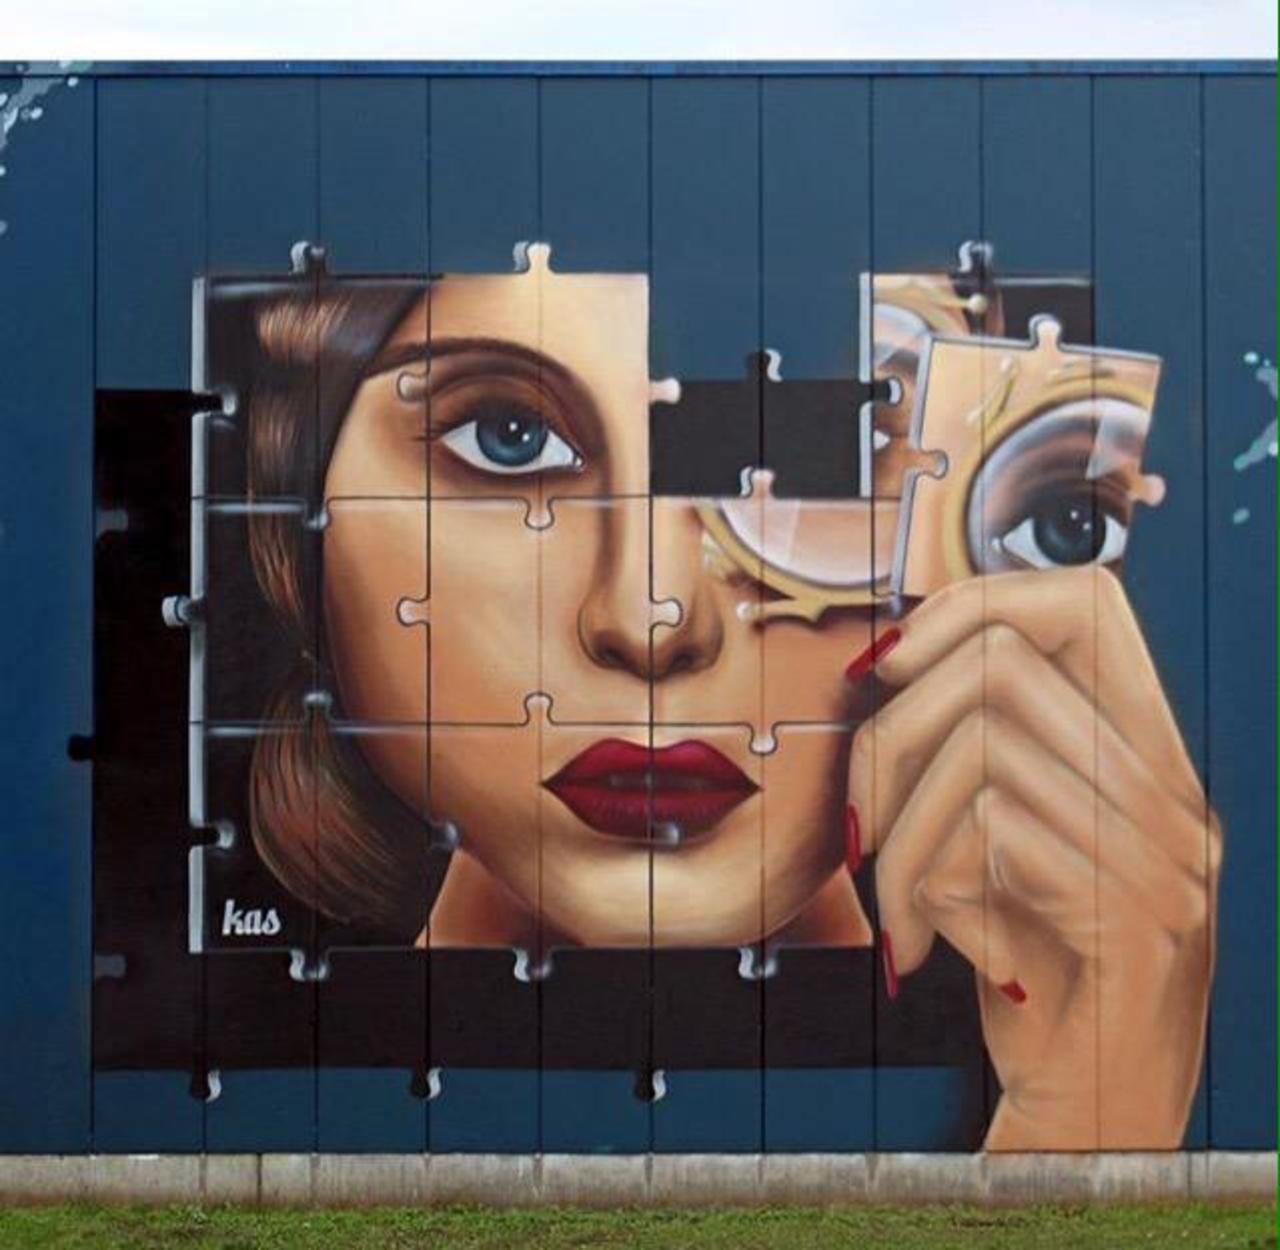 Kas Art's new Street Art "Piece of me" in Aalst Belgium 

#art #graffiti #mural #streetart http://t.co/7svSgq0oMW googlestreetart chinato…